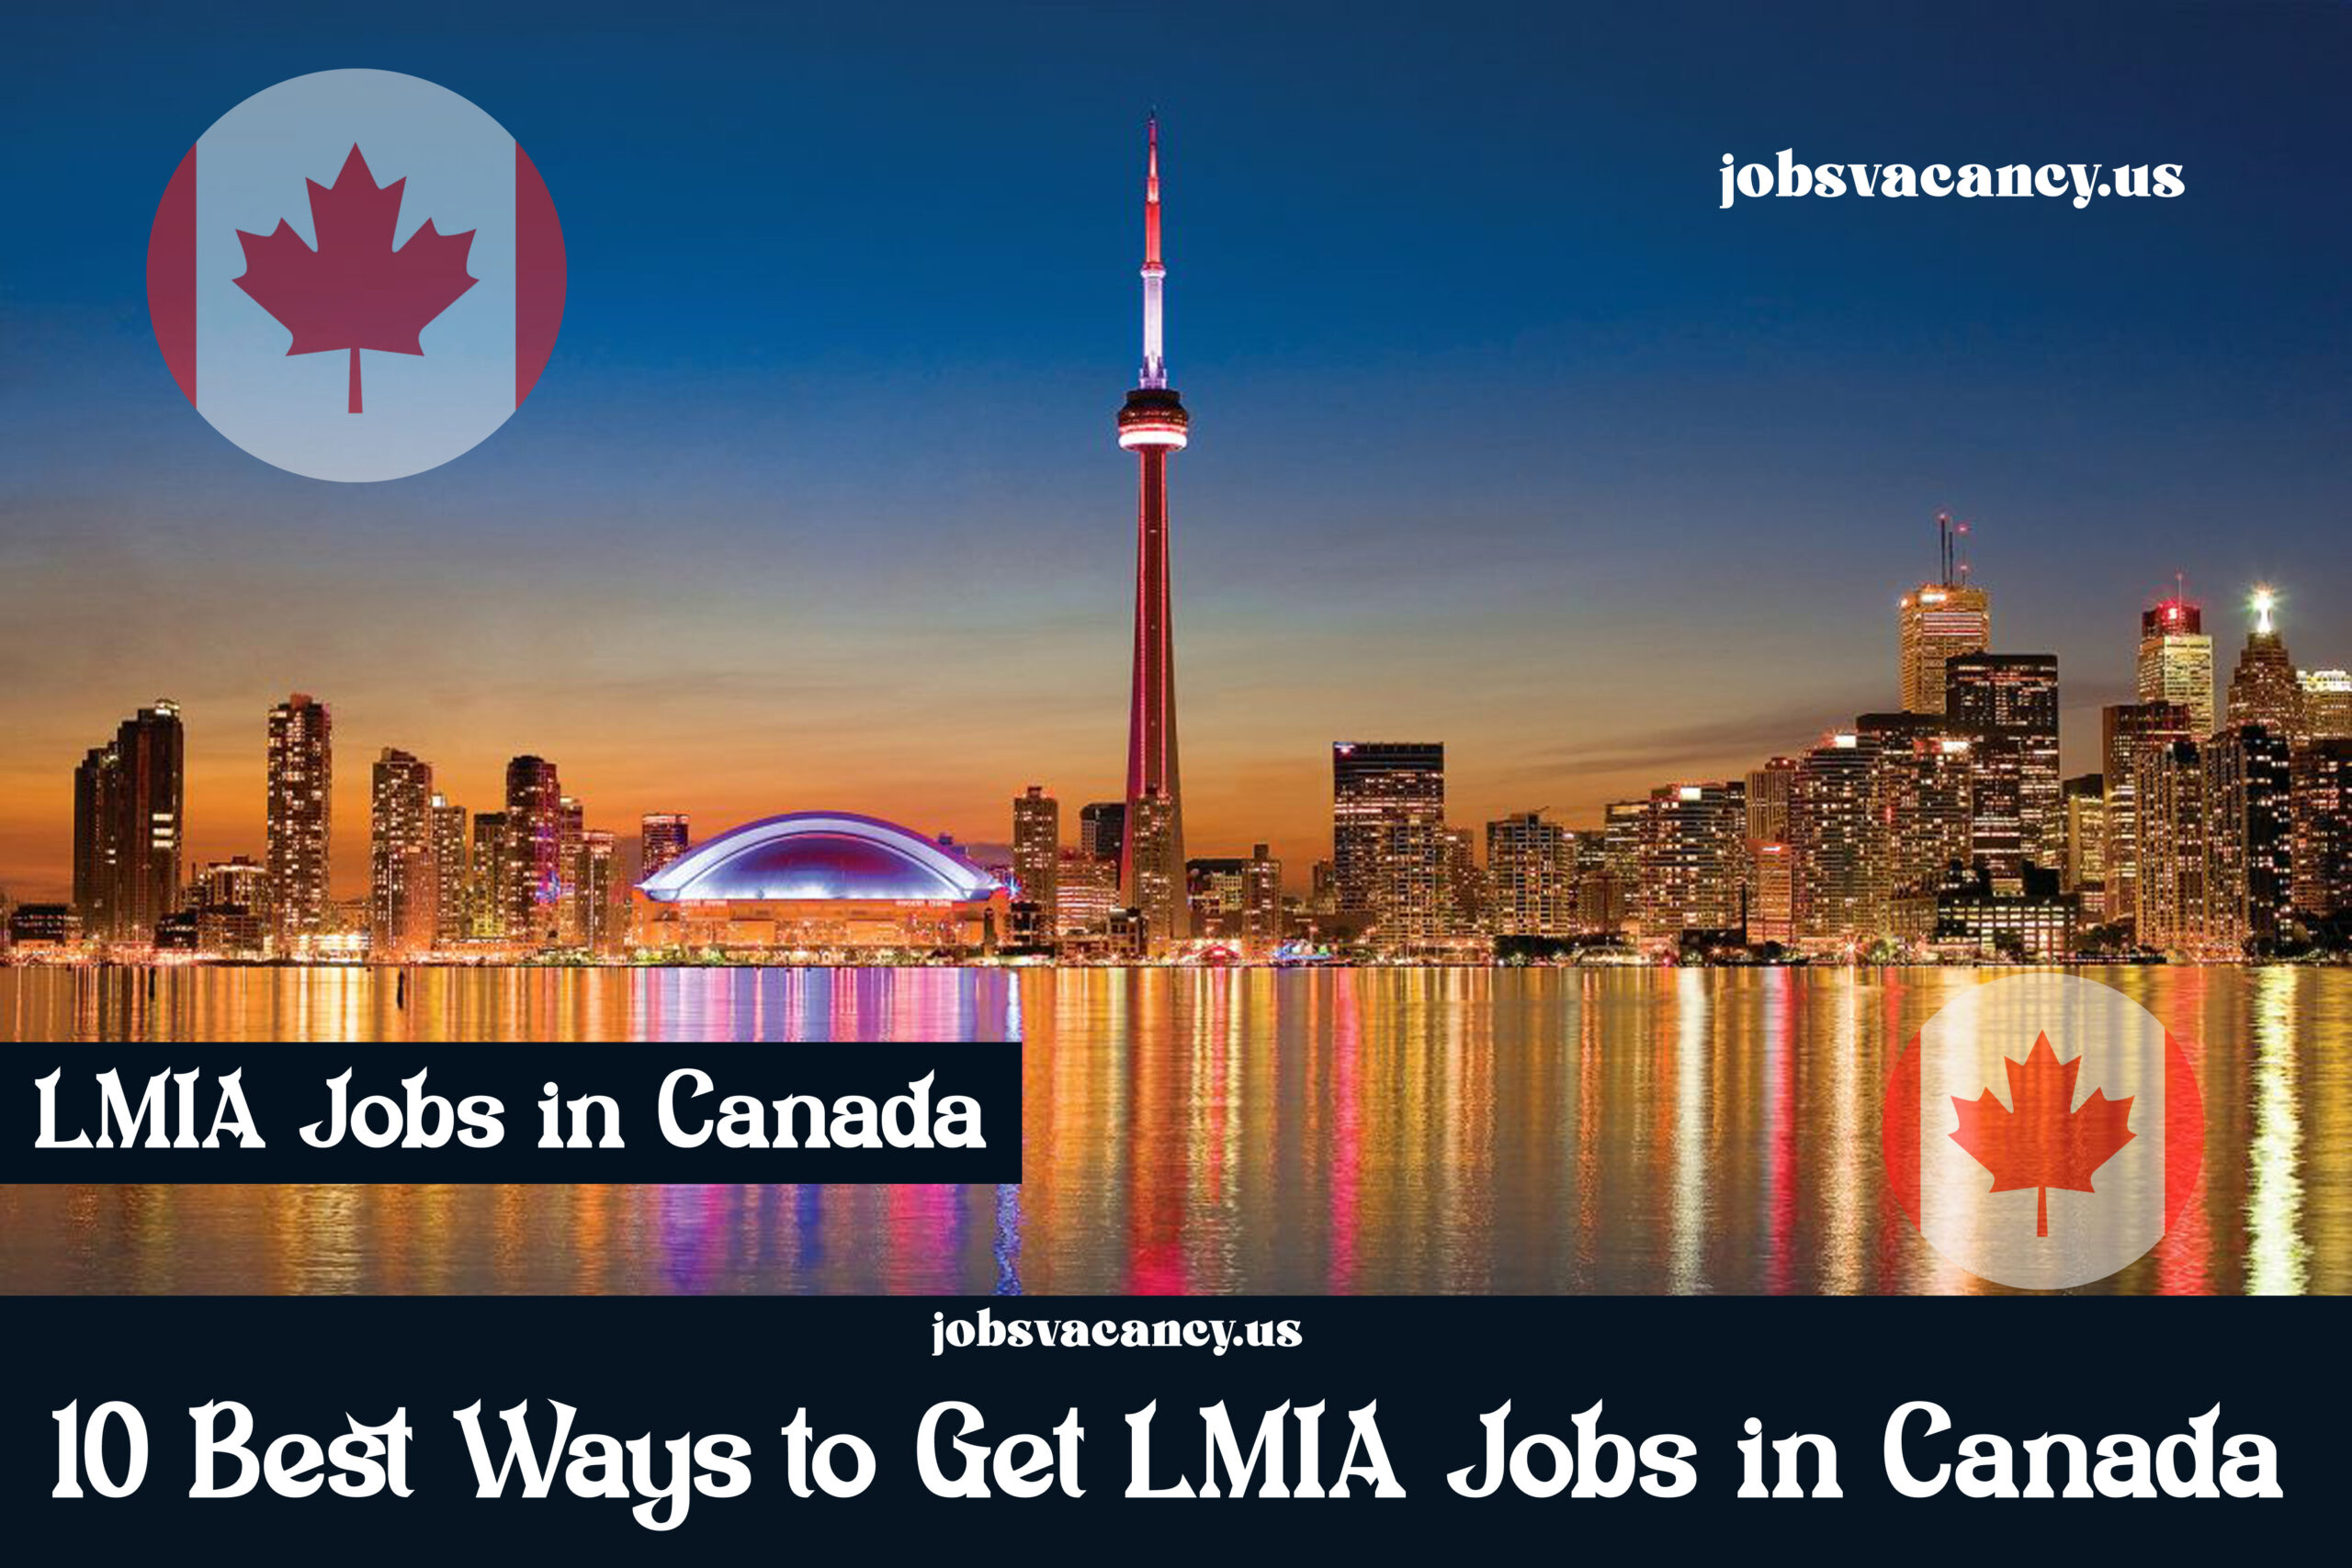 10 Best Ways to Get LMIA Jobs in Canada